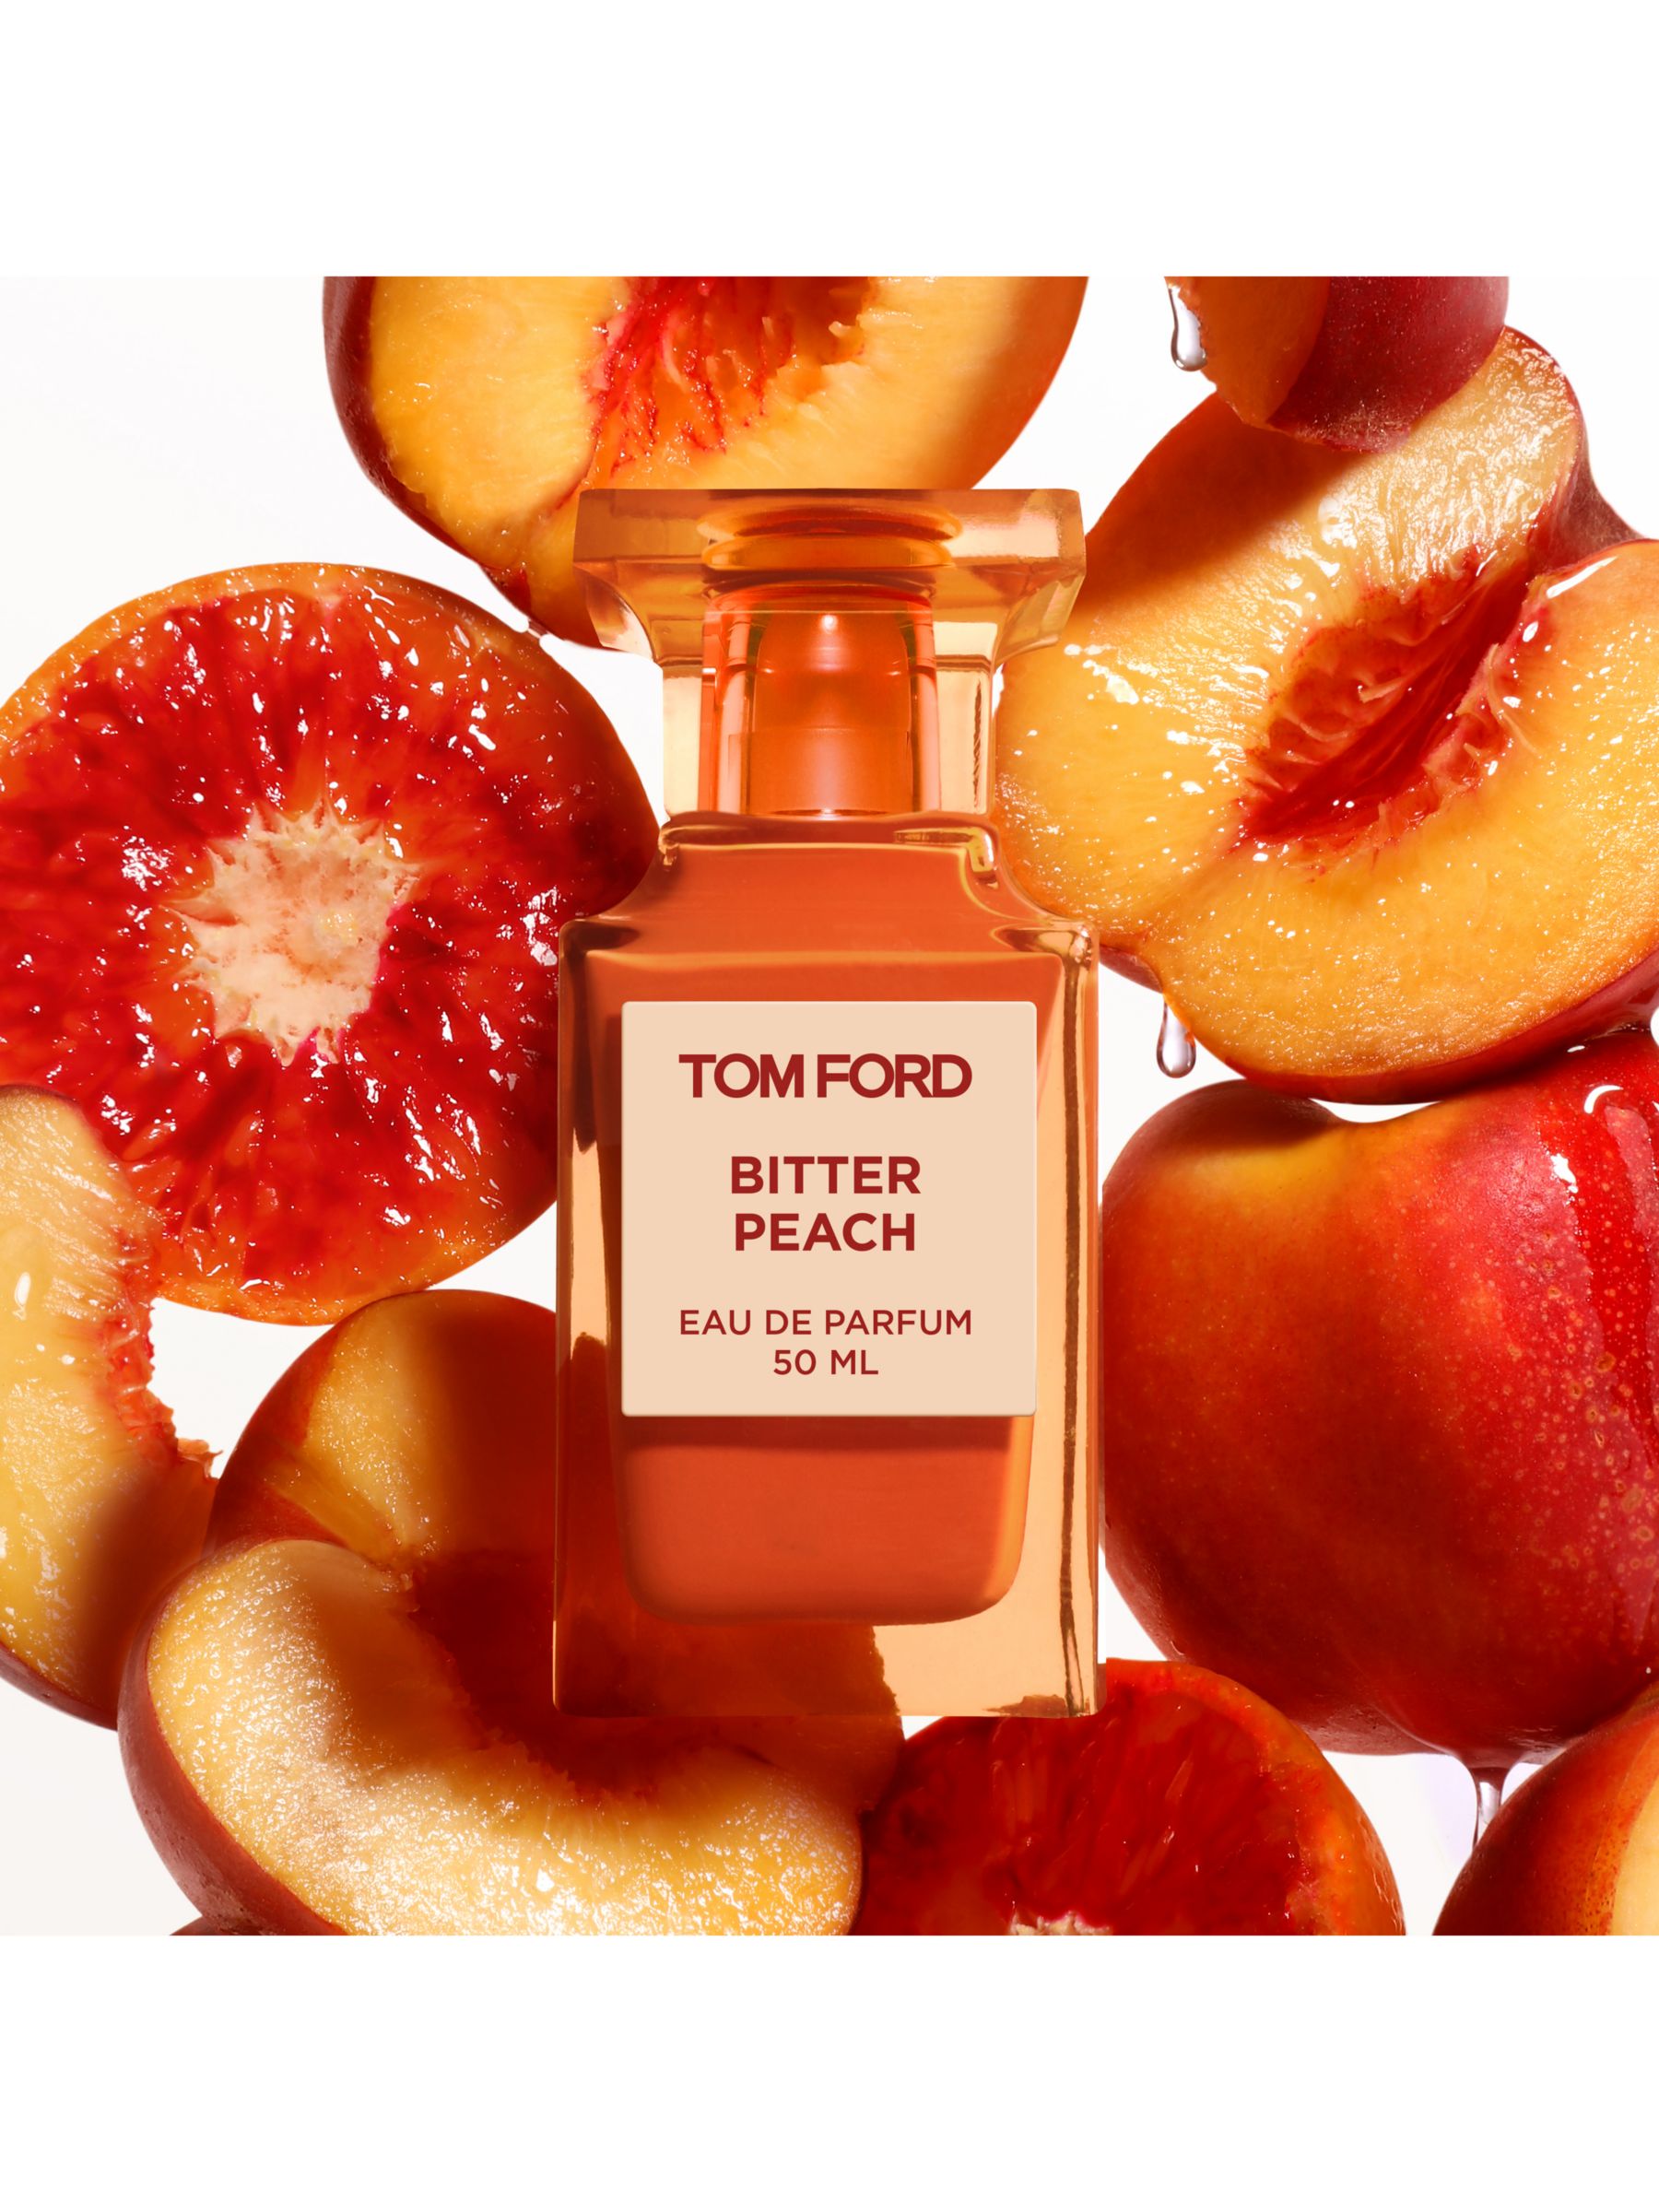 TOM FORD Private Blend Bitter Peach Eau de Parfum, 50ml at John Lewis &  Partners